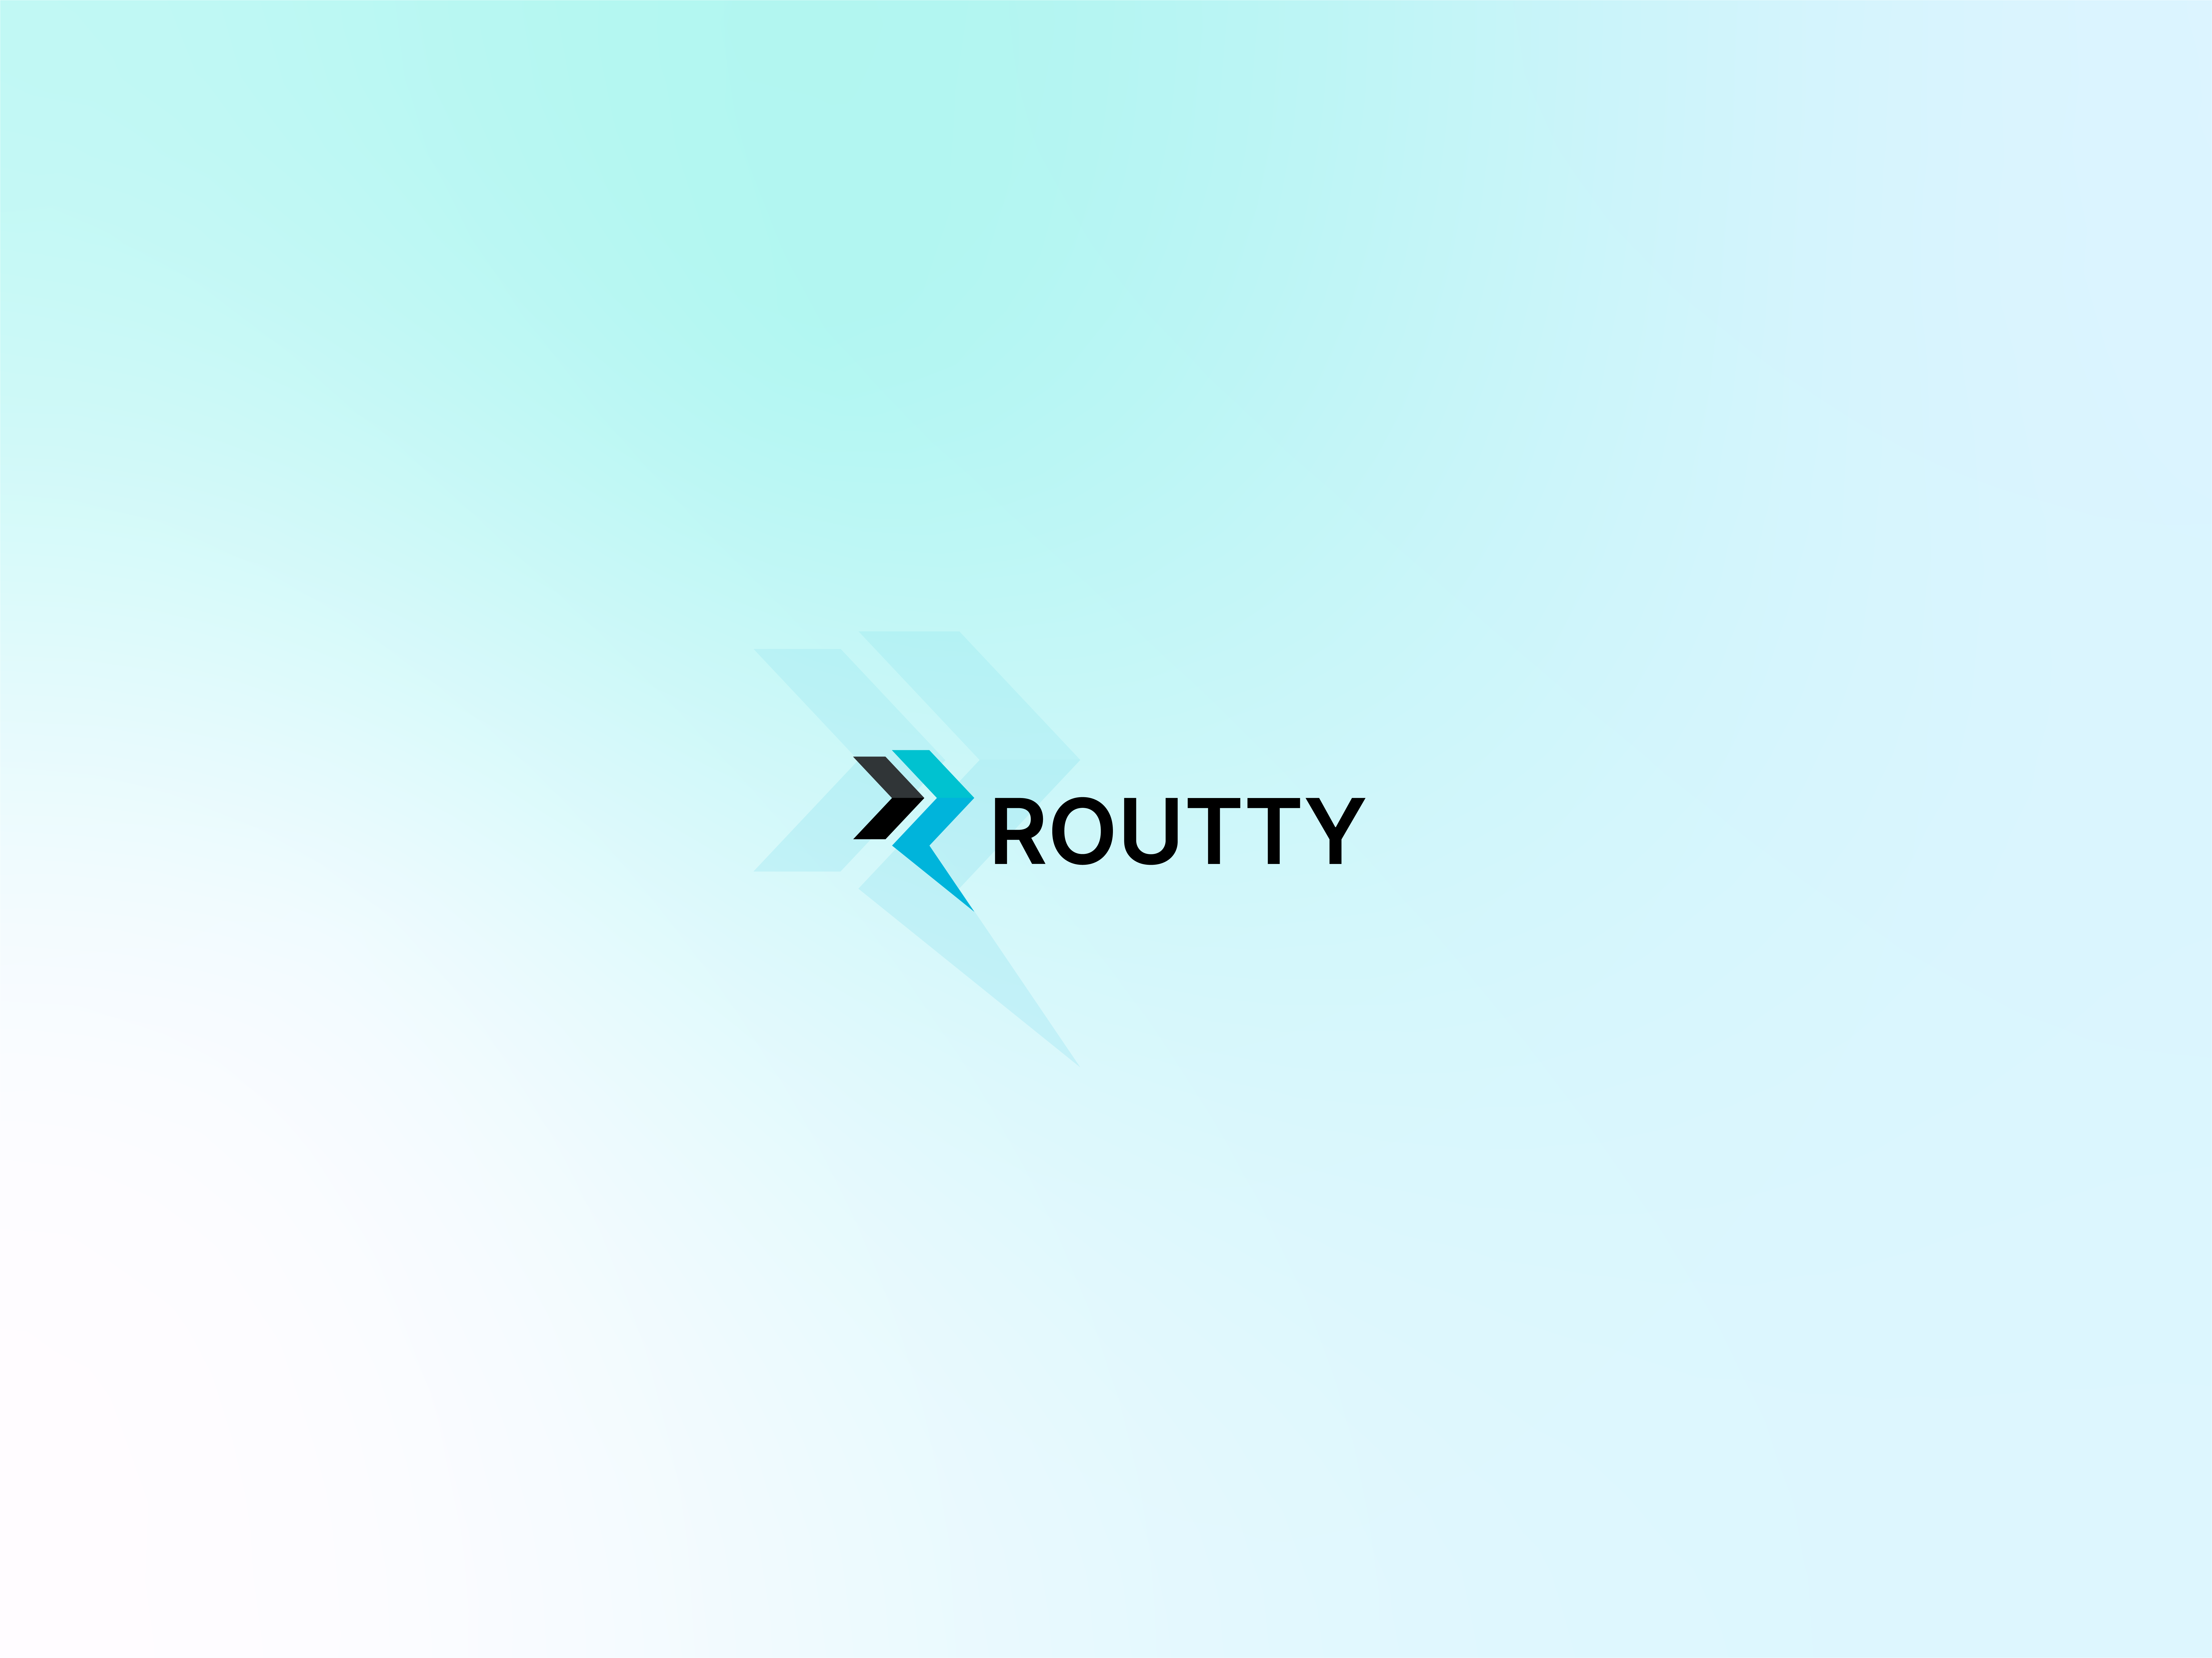 Routty logo